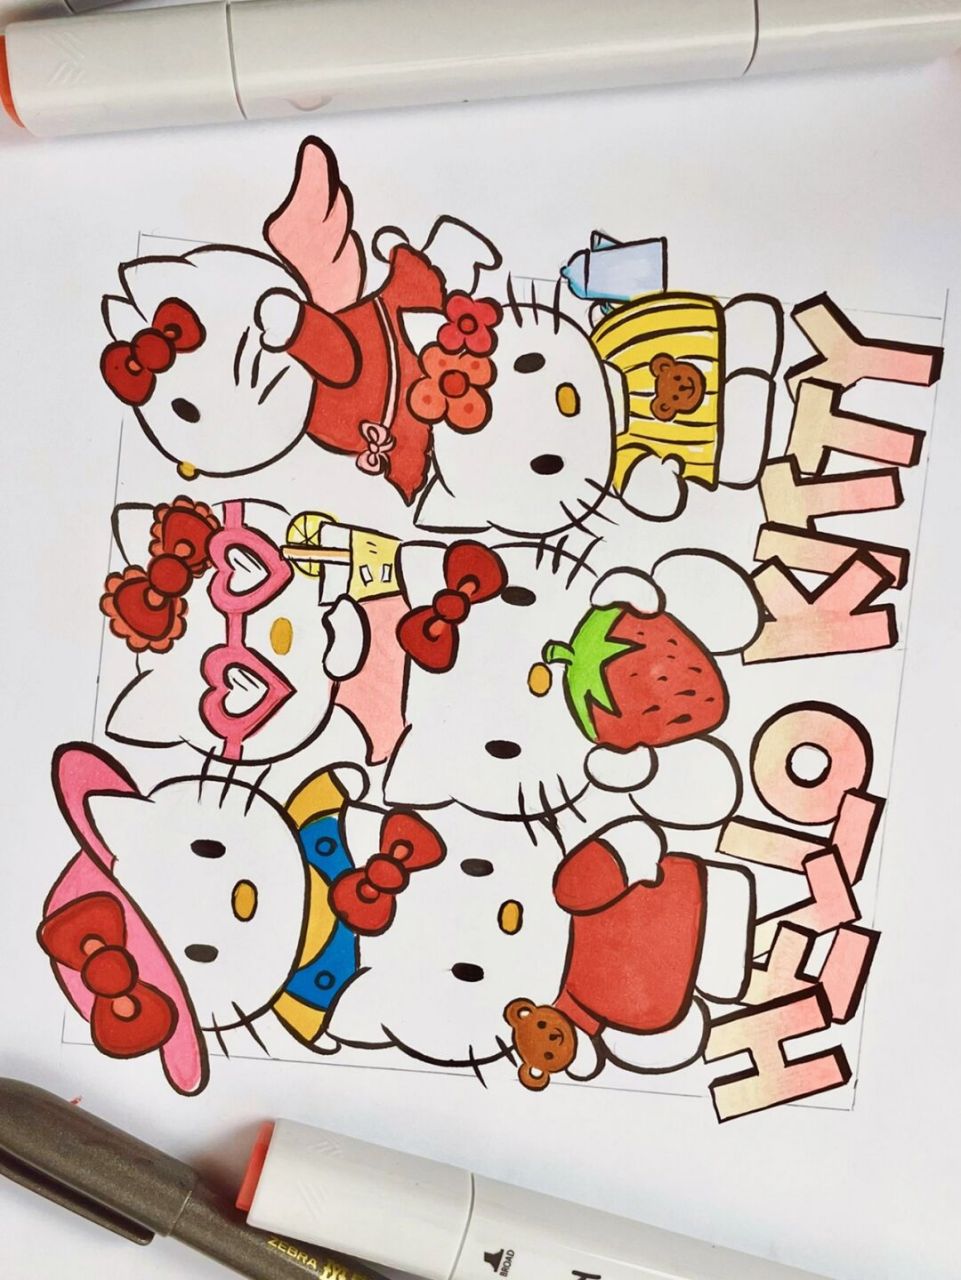 kitty猫简笔画涂色彩色图片